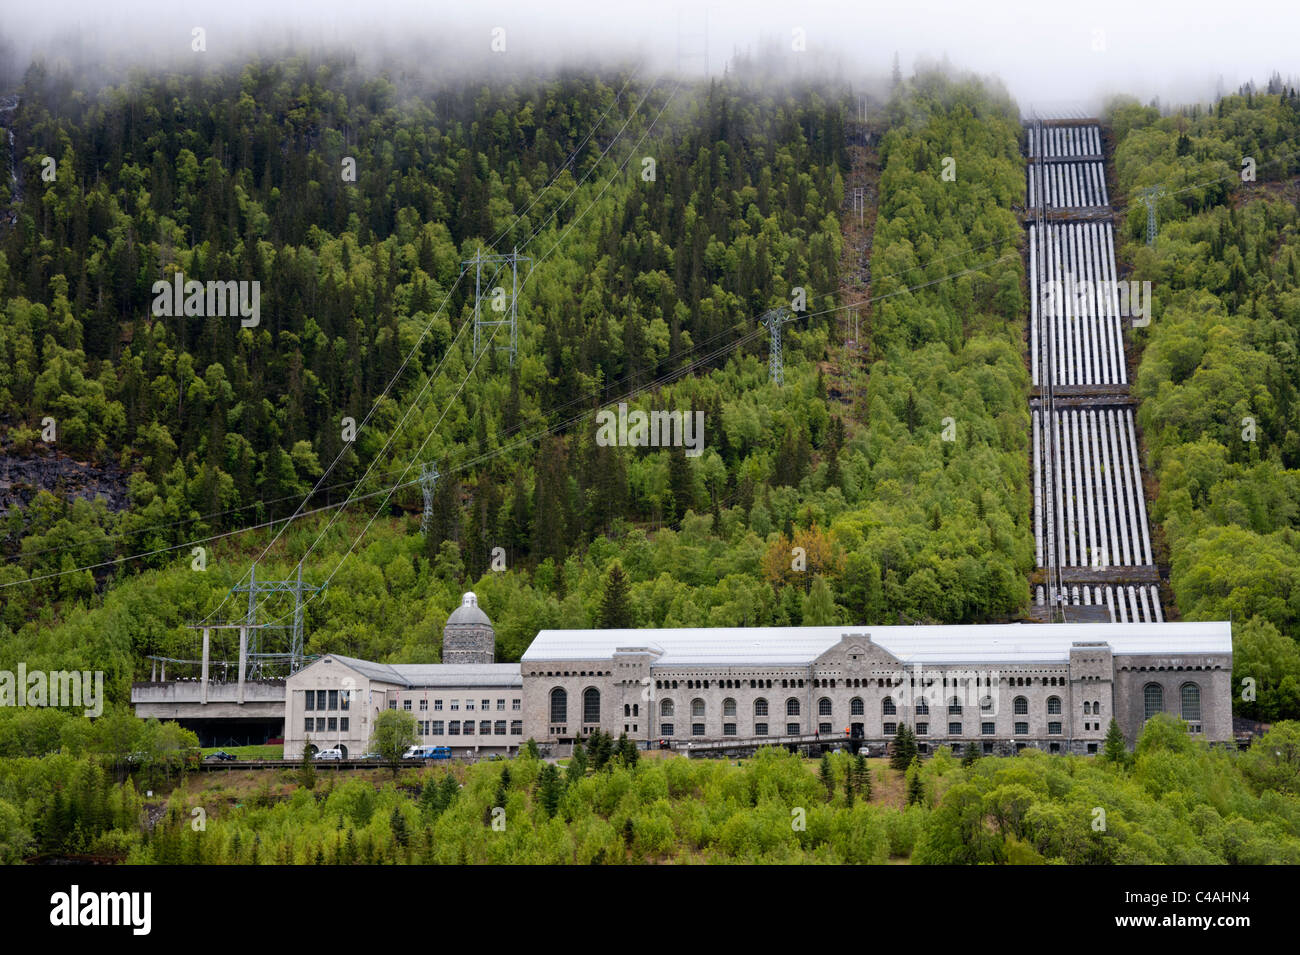 Vemork power station, Rjukan, Telemark, Norway Stock Photo